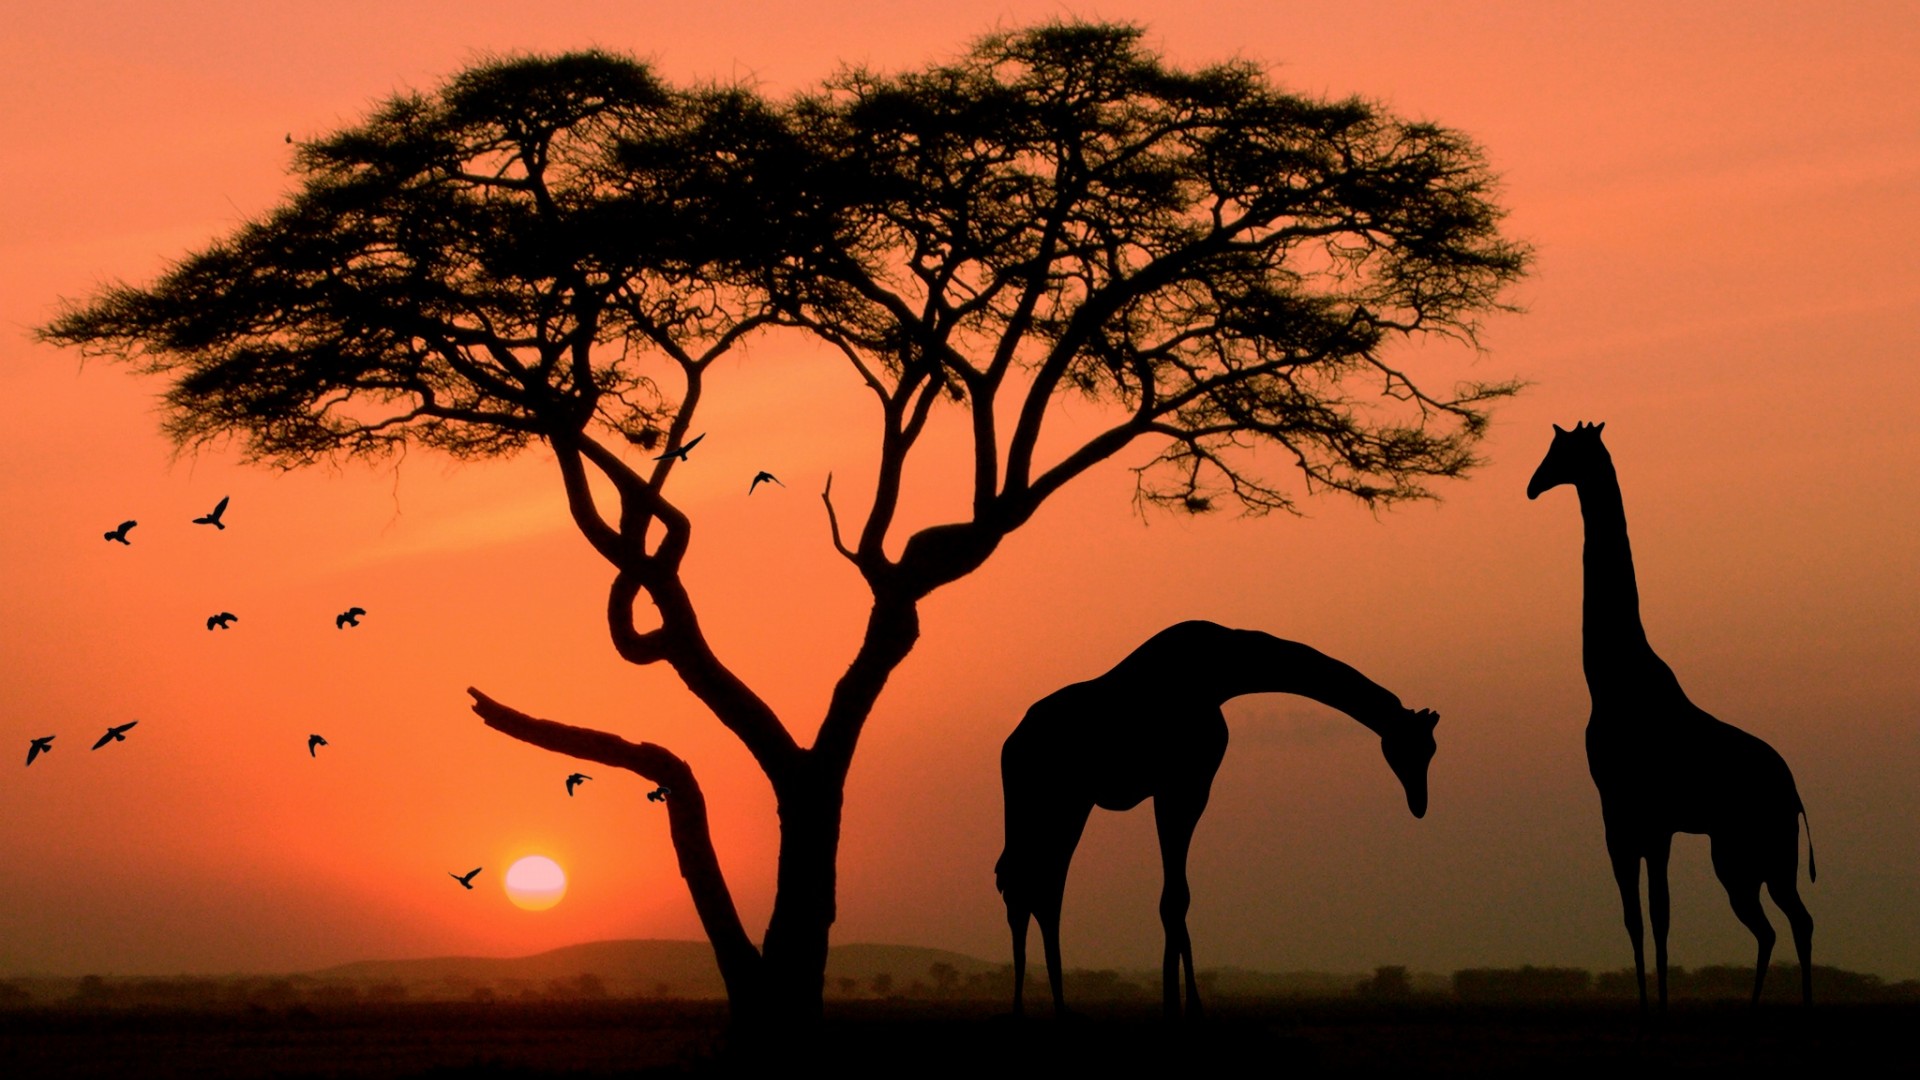 Giraffe in Africa 1920x1080 (1080p) - Wallpaper - HD Wallpapers